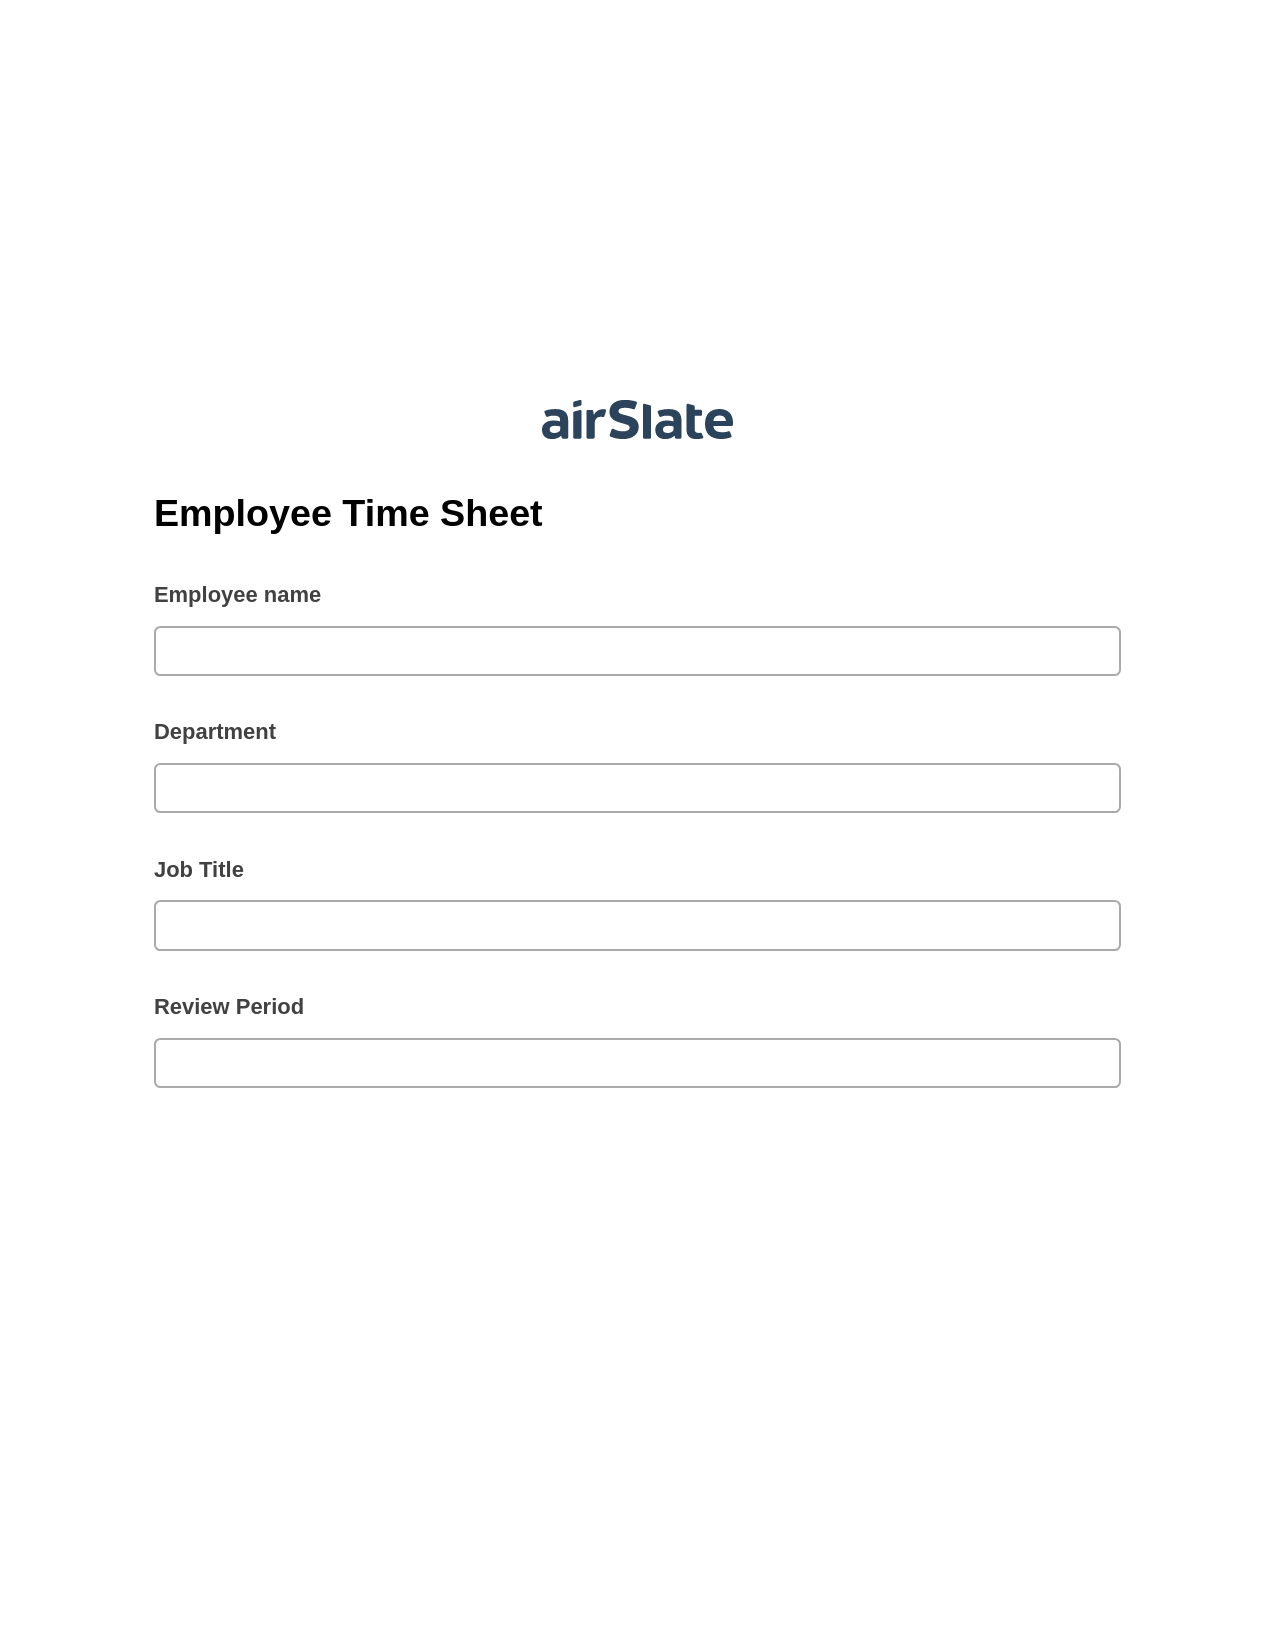 Employee Time Sheet Pre-fill from Salesforce Records Bot, Update Audit Trail Bot, Slack Two-Way Binding Bot